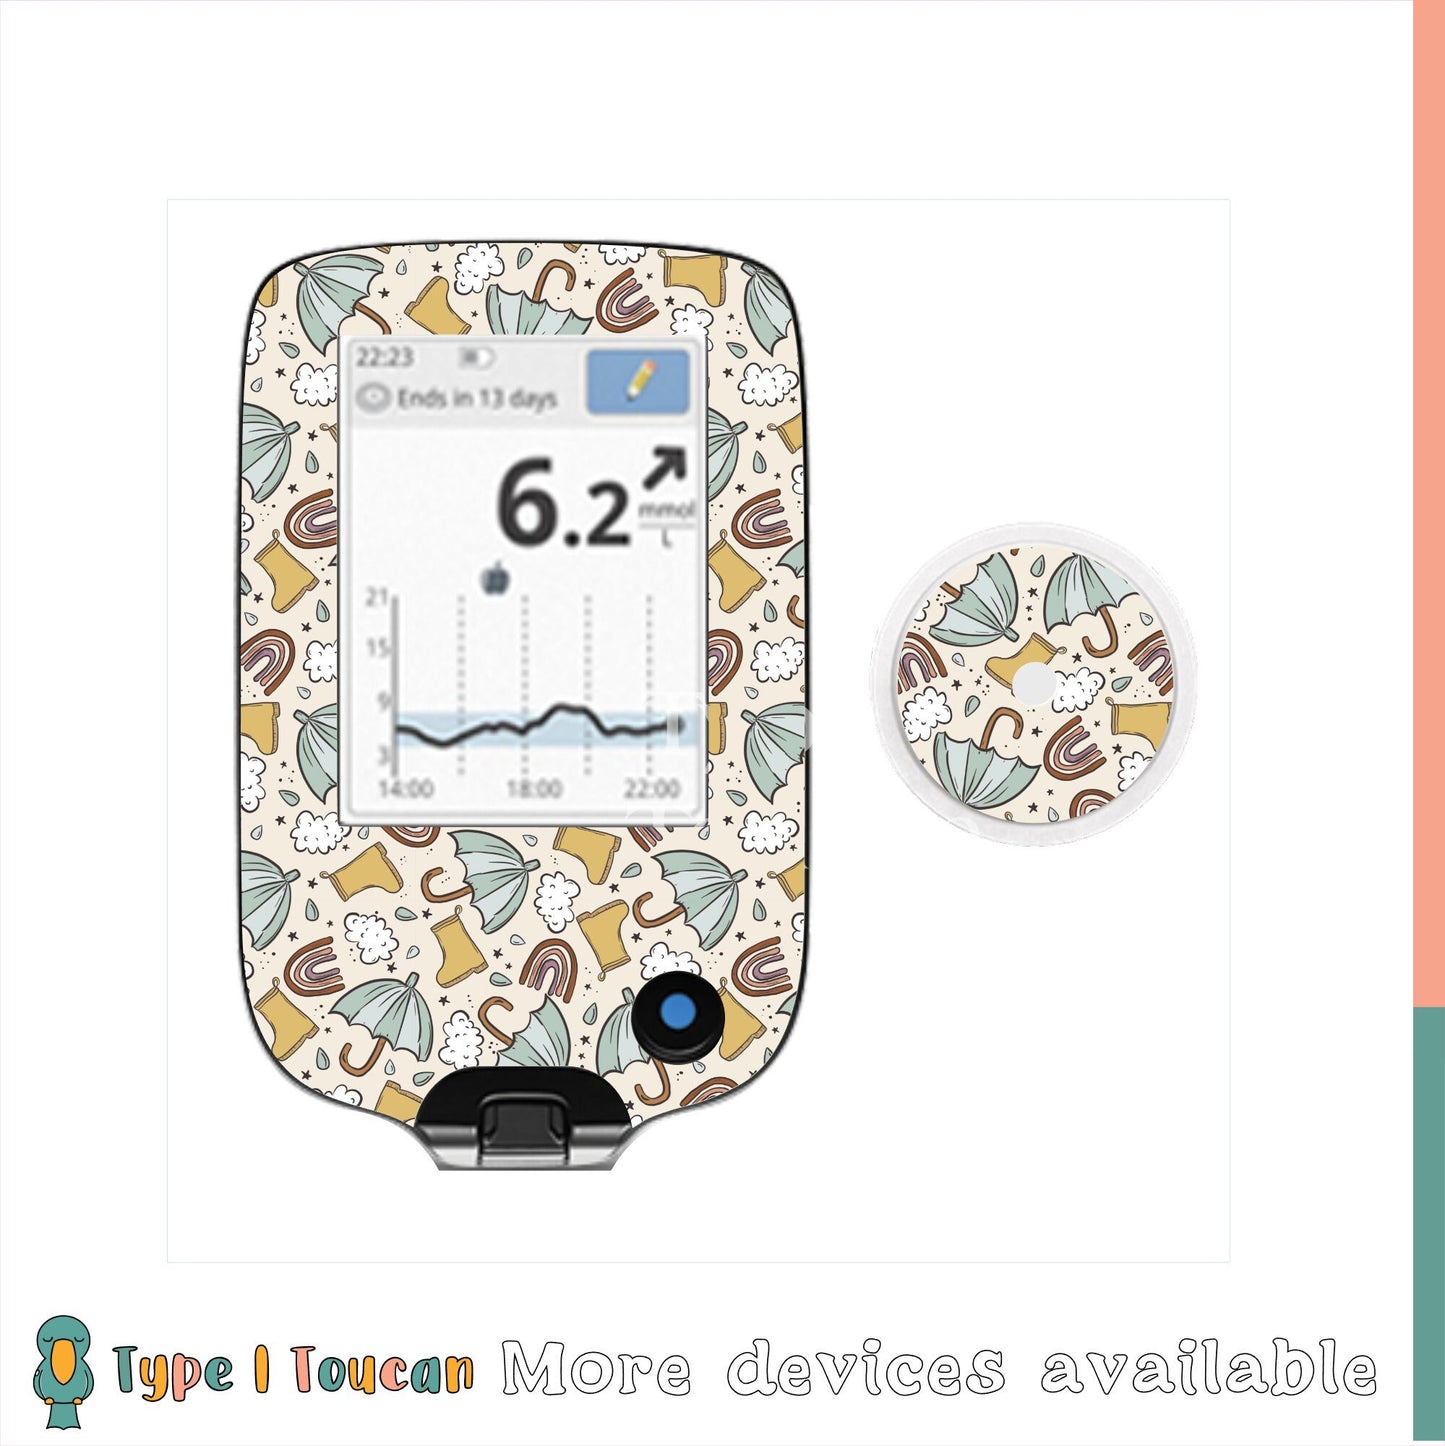 Rainy Day Bliss | Diabetes Stickers | Dexcom G6 Omnipod Freestyle Libre Tslim Medtronic Enlite Minimed Pump Contour Decal